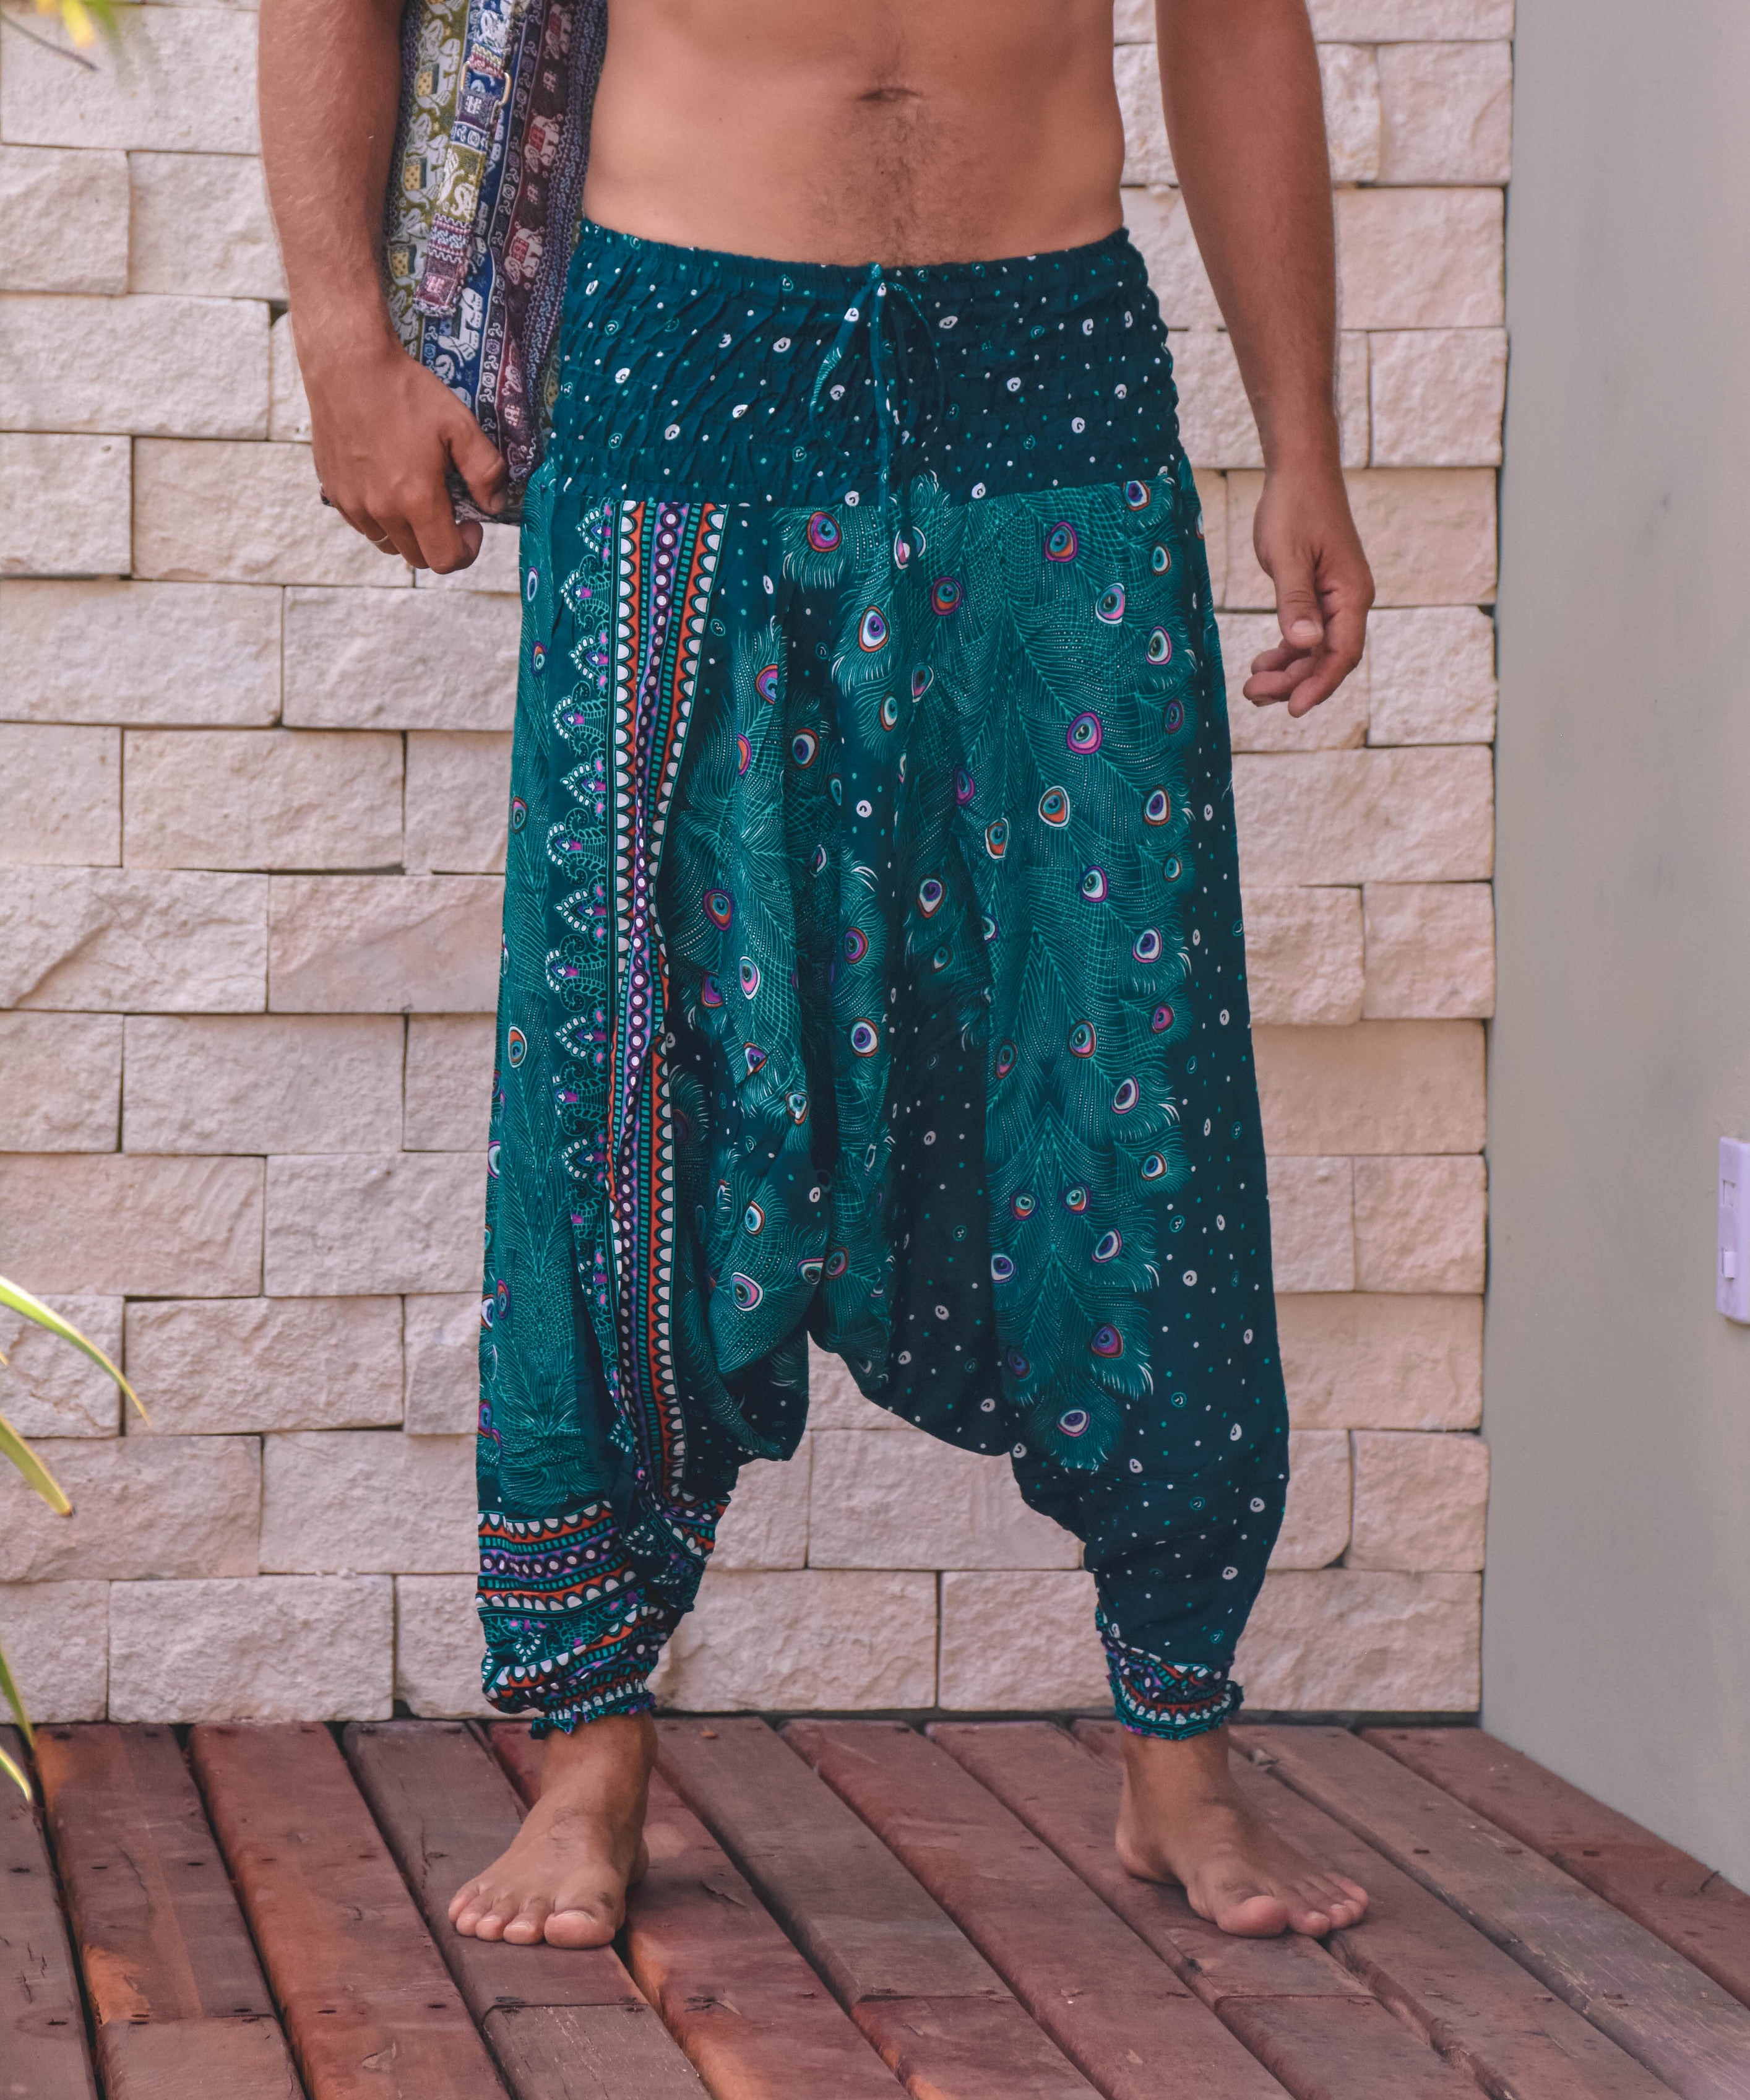 TAHITI YOGA PANTS Elepanta Aladdin Pants - Buy Today Elephant Pants Jewelry And Bohemian Clothes Handmade In Thailand Help To Save The Elephants FairTrade And Vegan